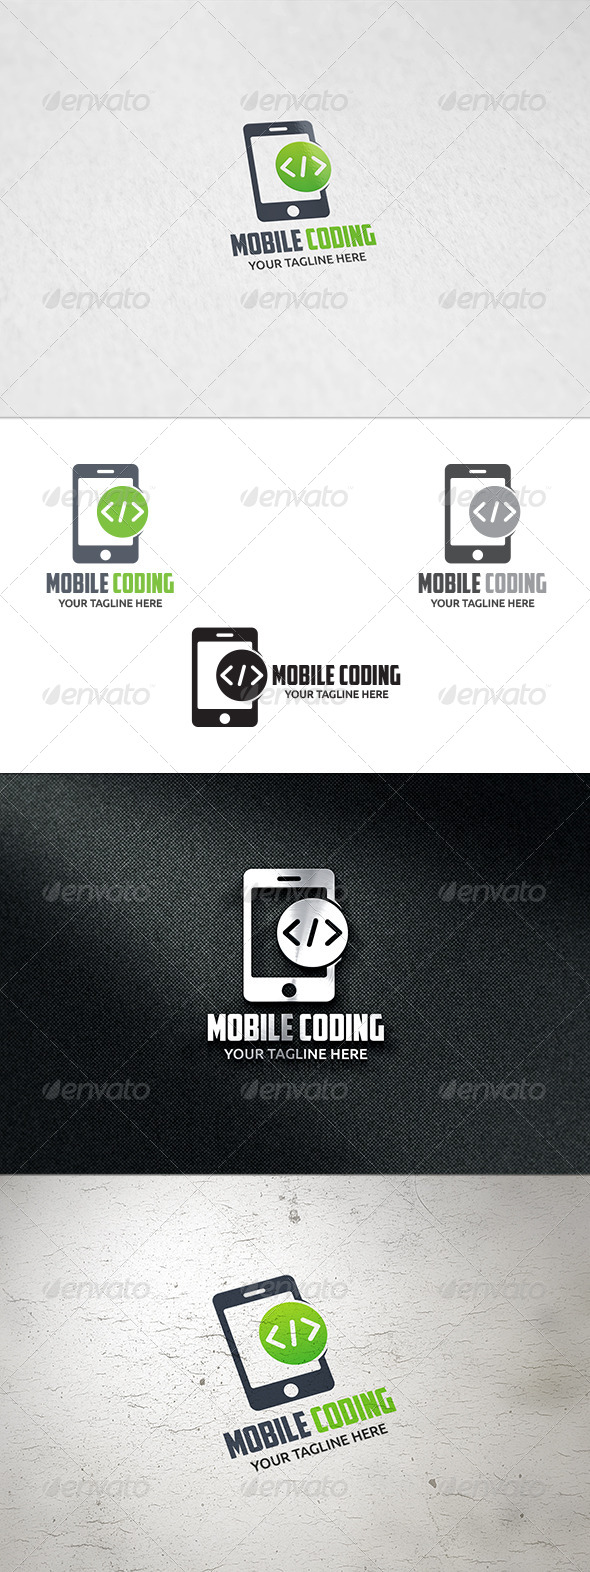 Mobile Coding - Logo Template